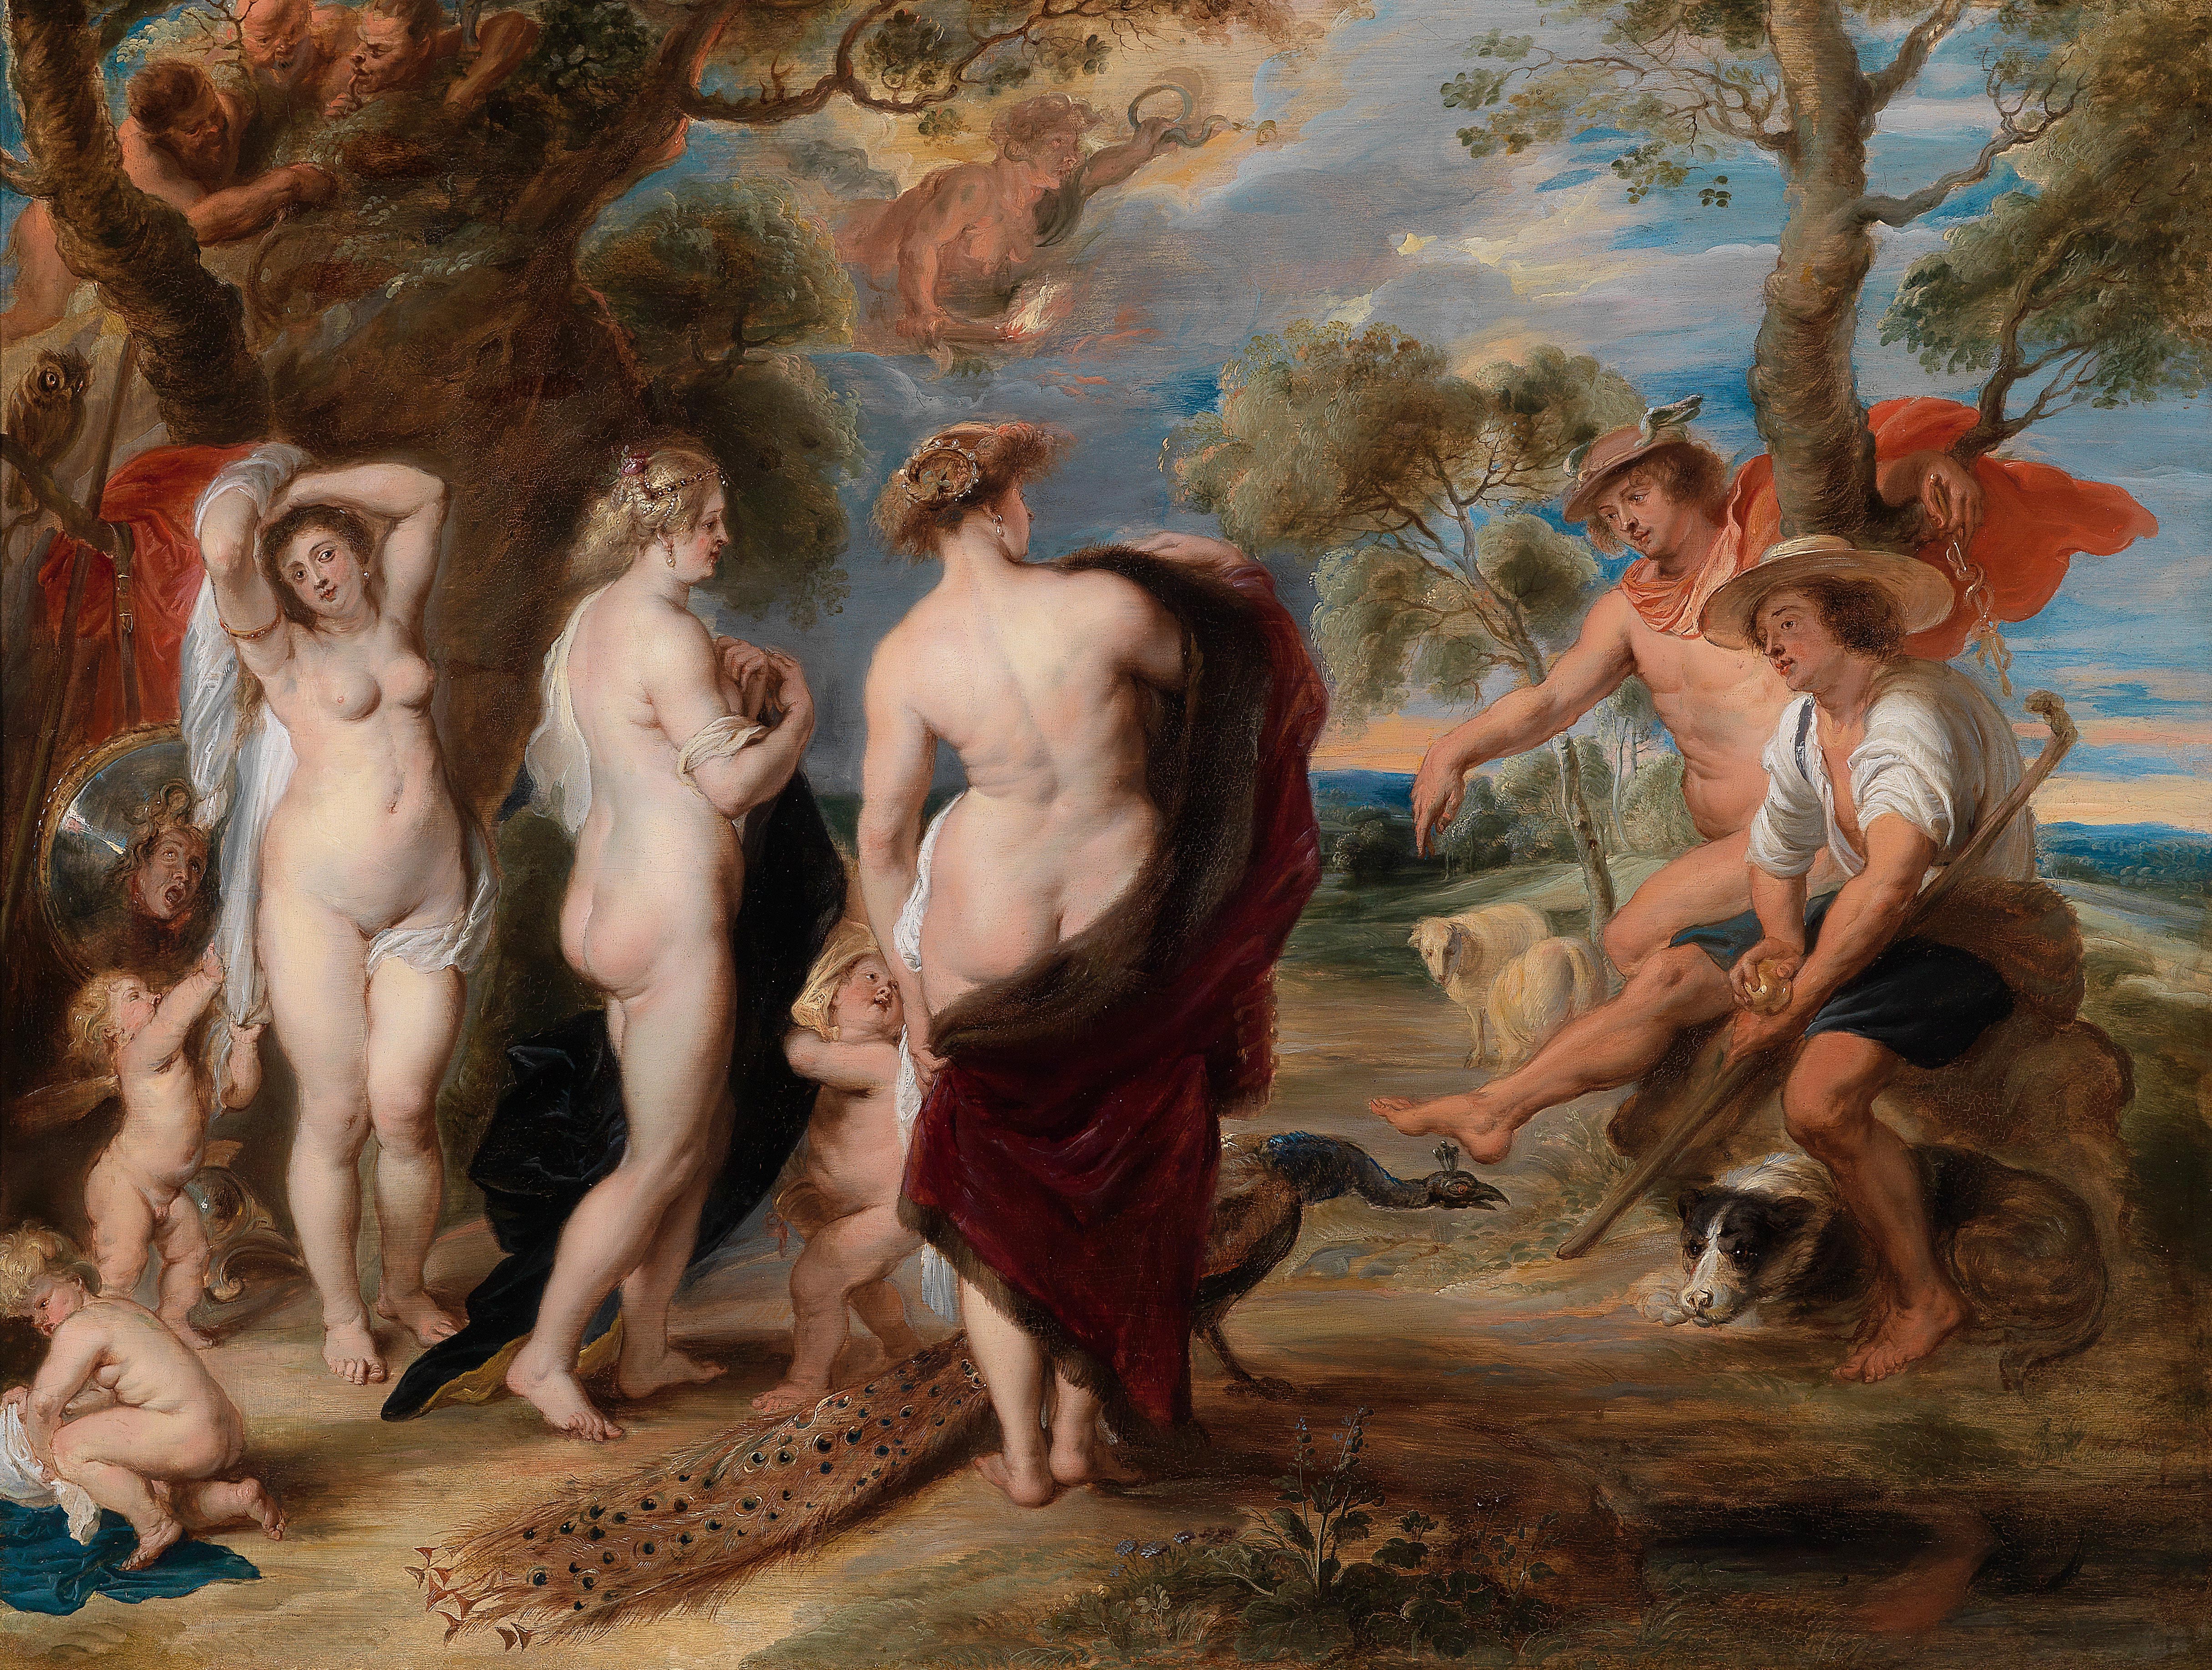 Párisz ítélete by Peter Paul Rubens - 1636 - 145 x 194 cm 